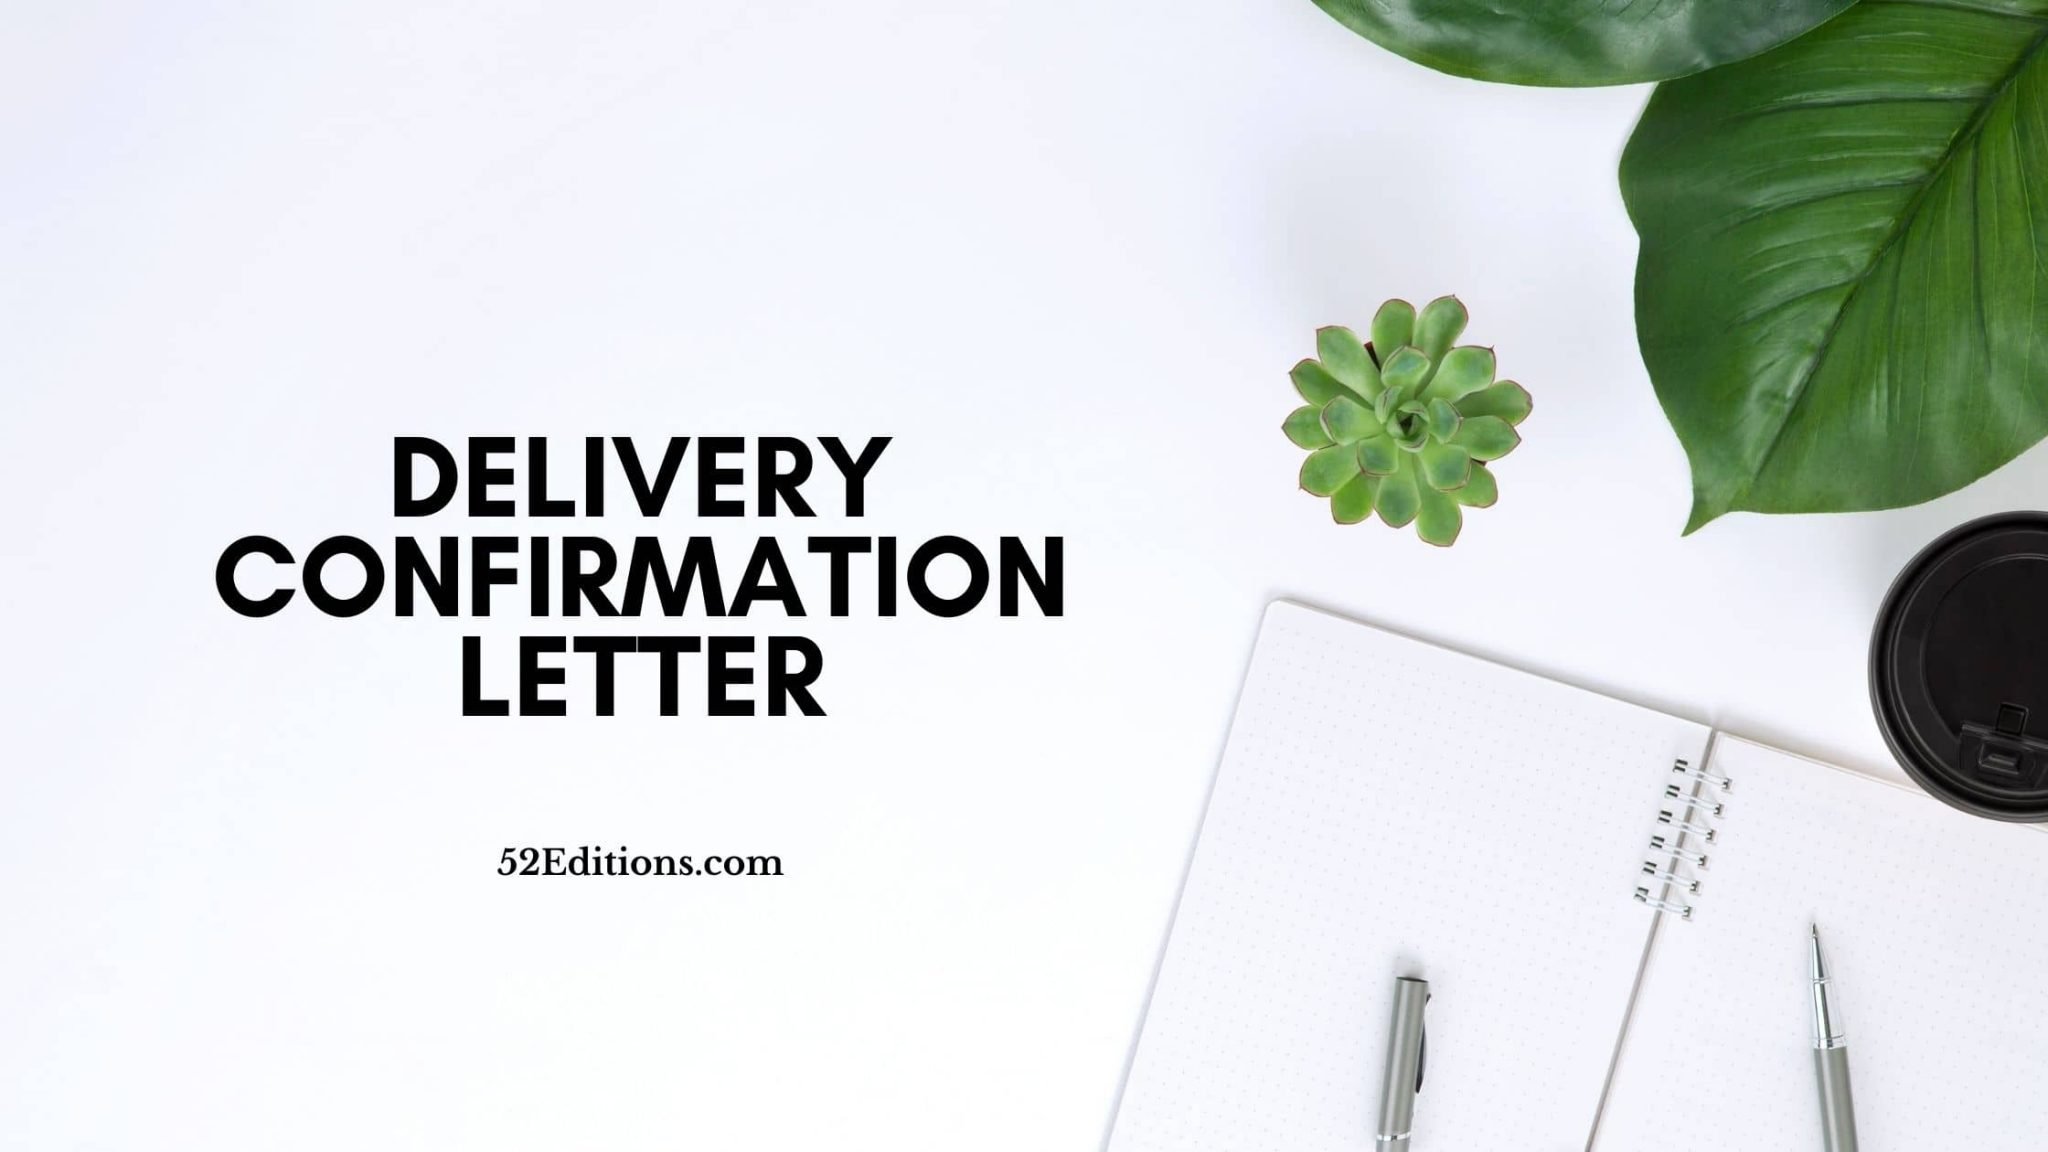 Delivery Confirmation Letter (Sample) // Get FREE Letter Templates